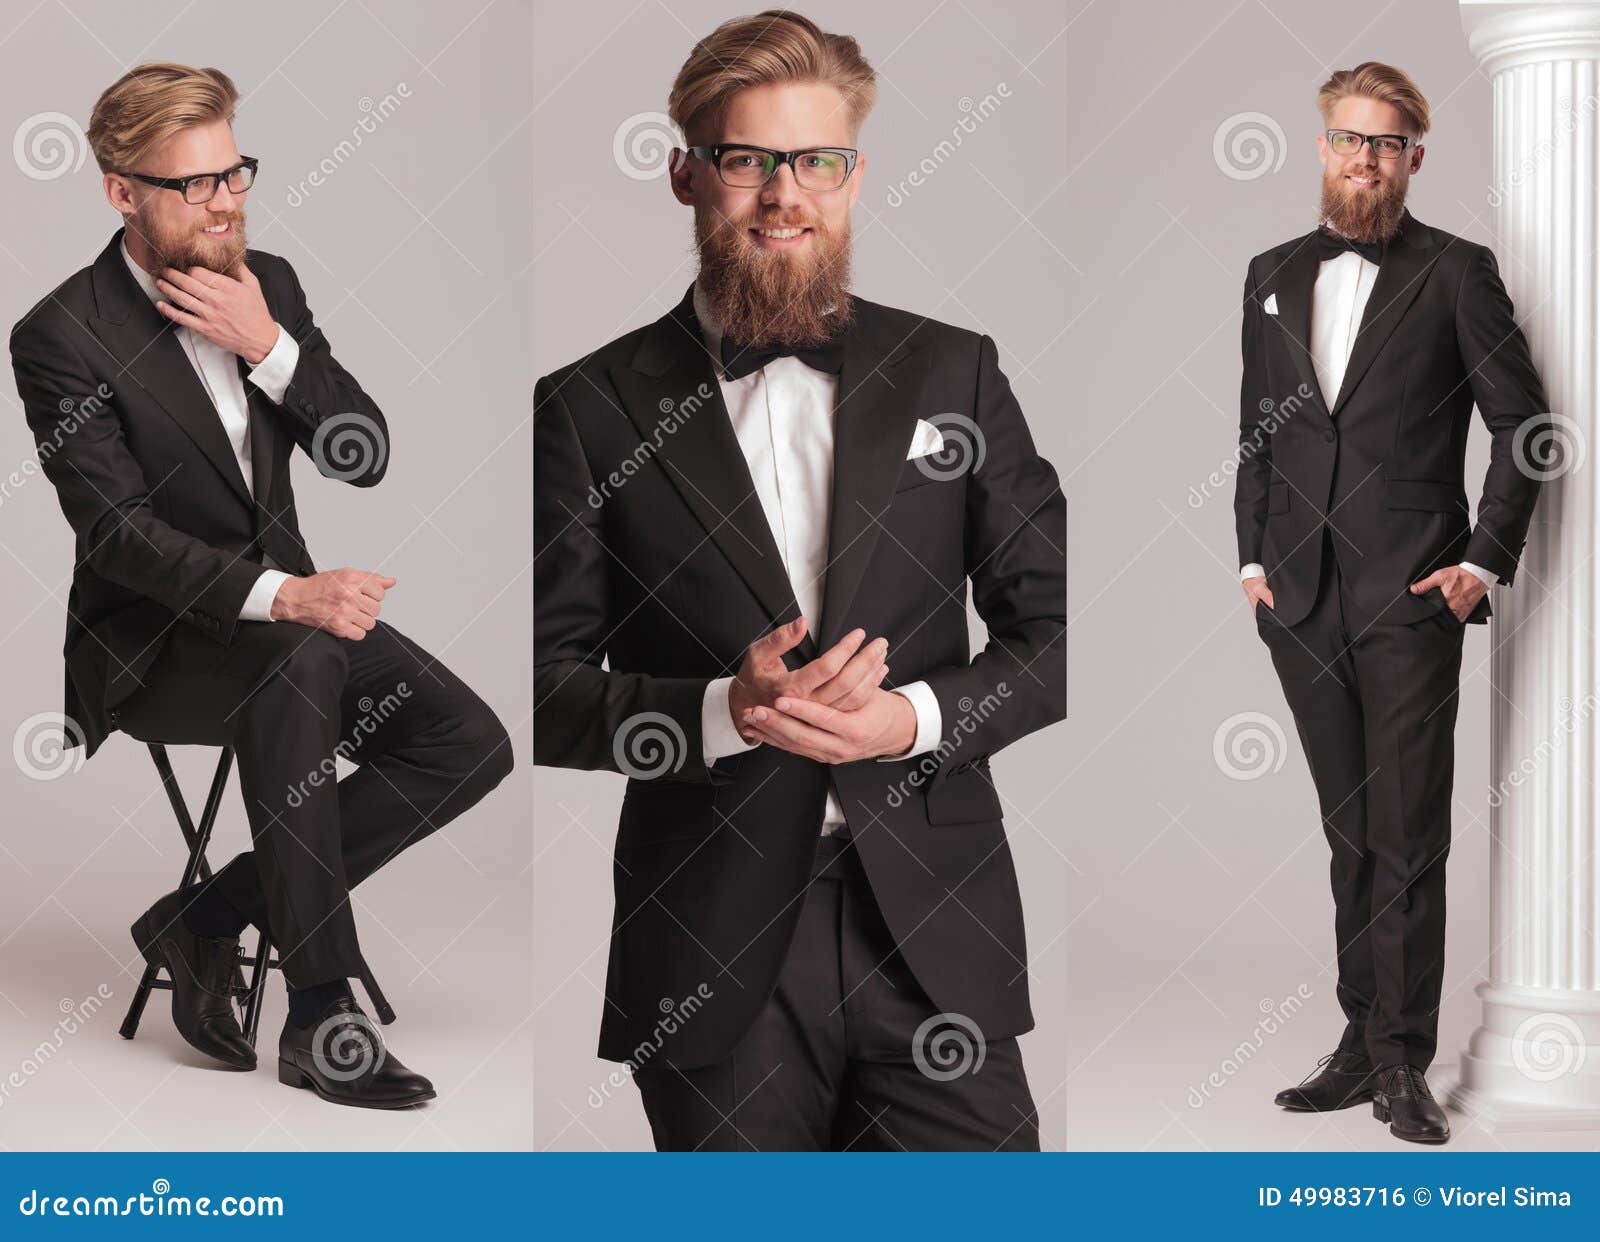 I Love Men In Suits | Corporate portrait, Business portrait photography,  Photography poses for men